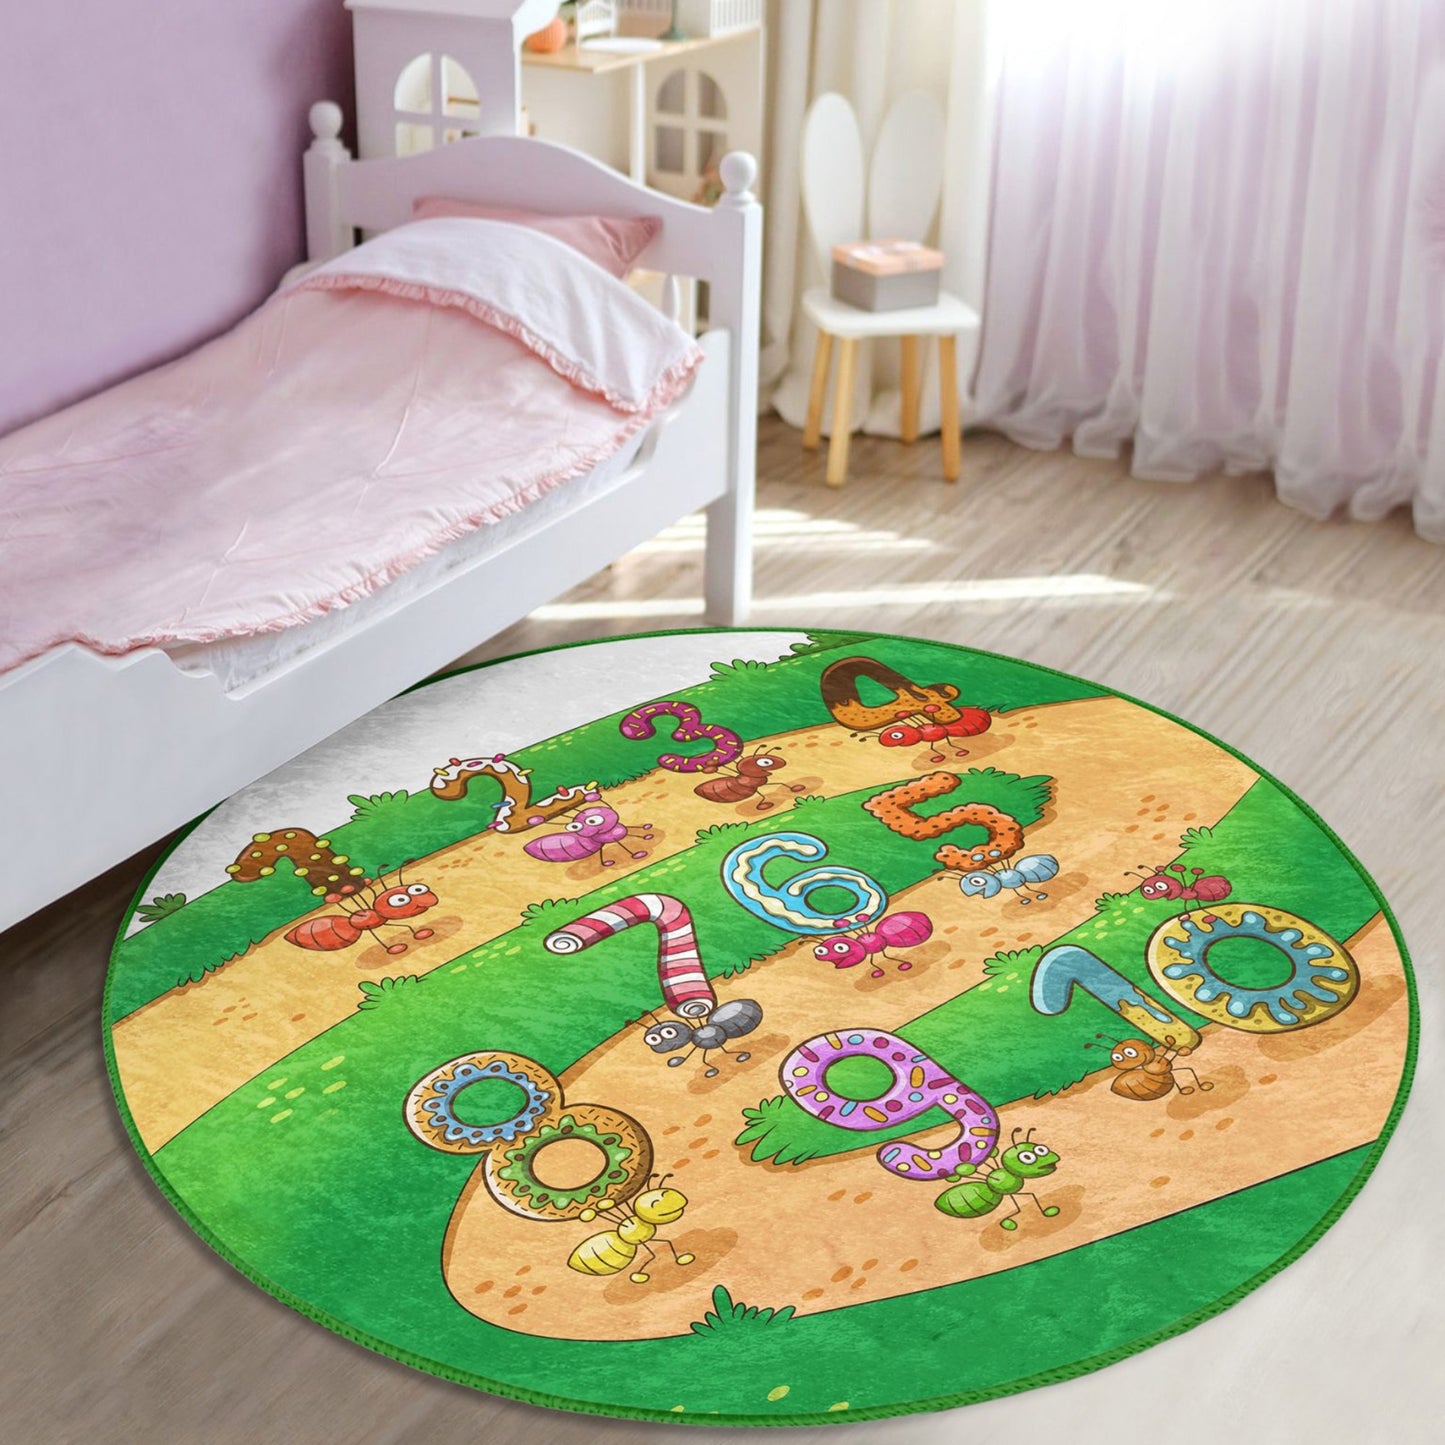 Educational Ant Theme Nursery Carpet - Whimsical Design